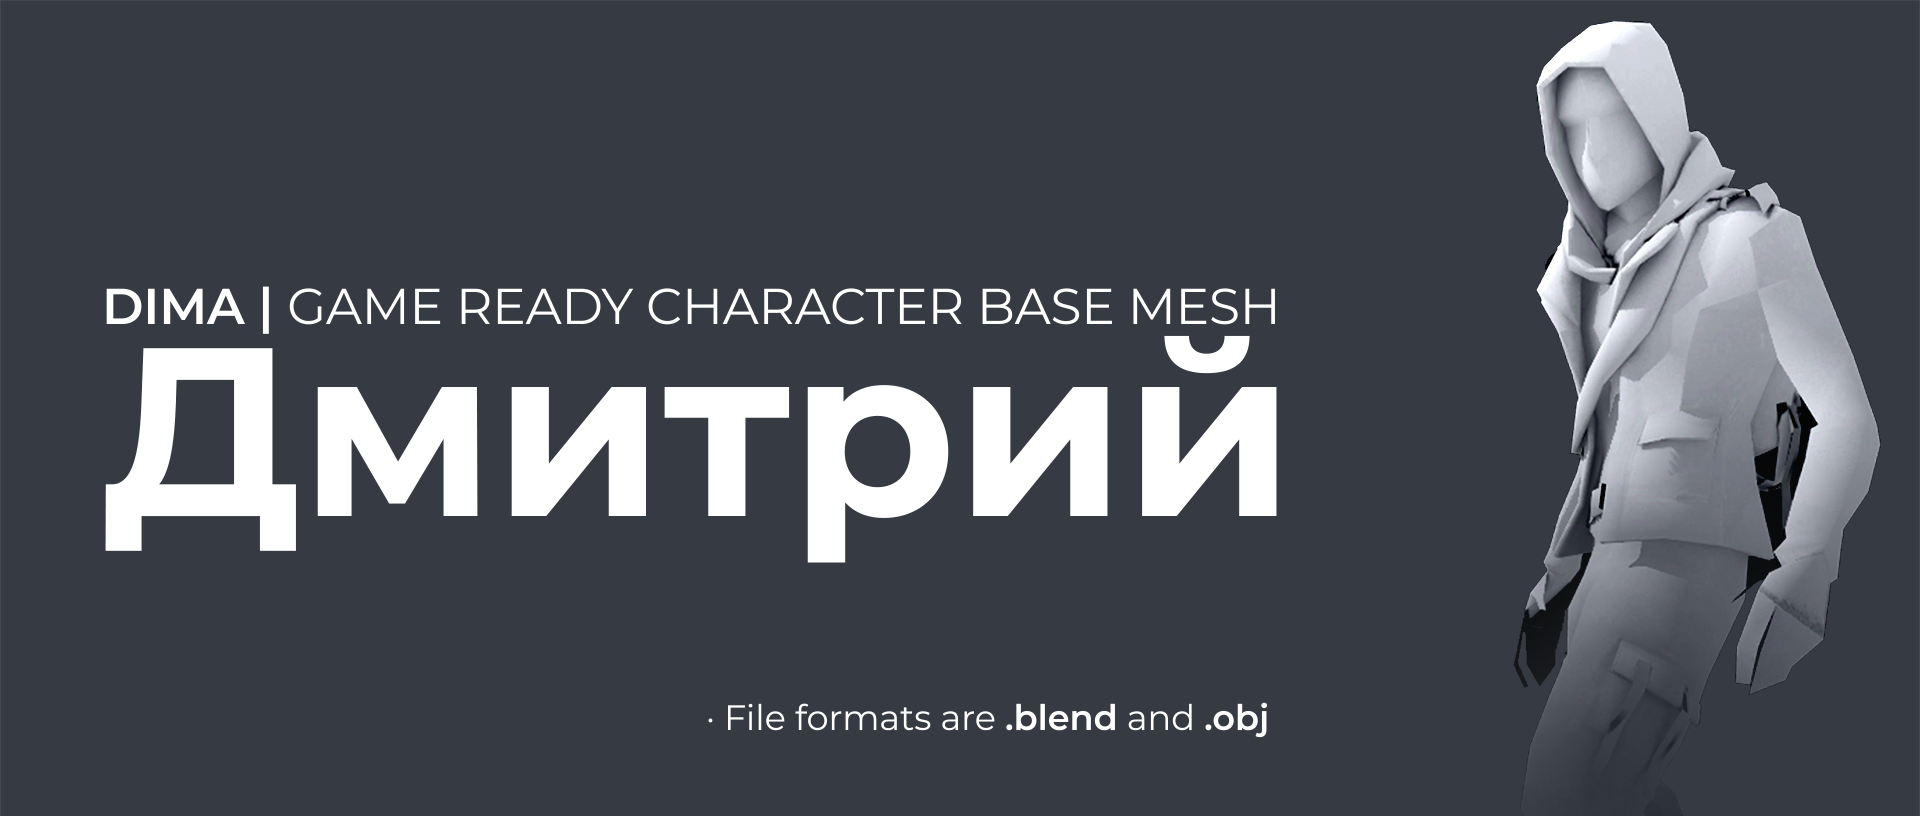 Dima | Game ready character base mesh